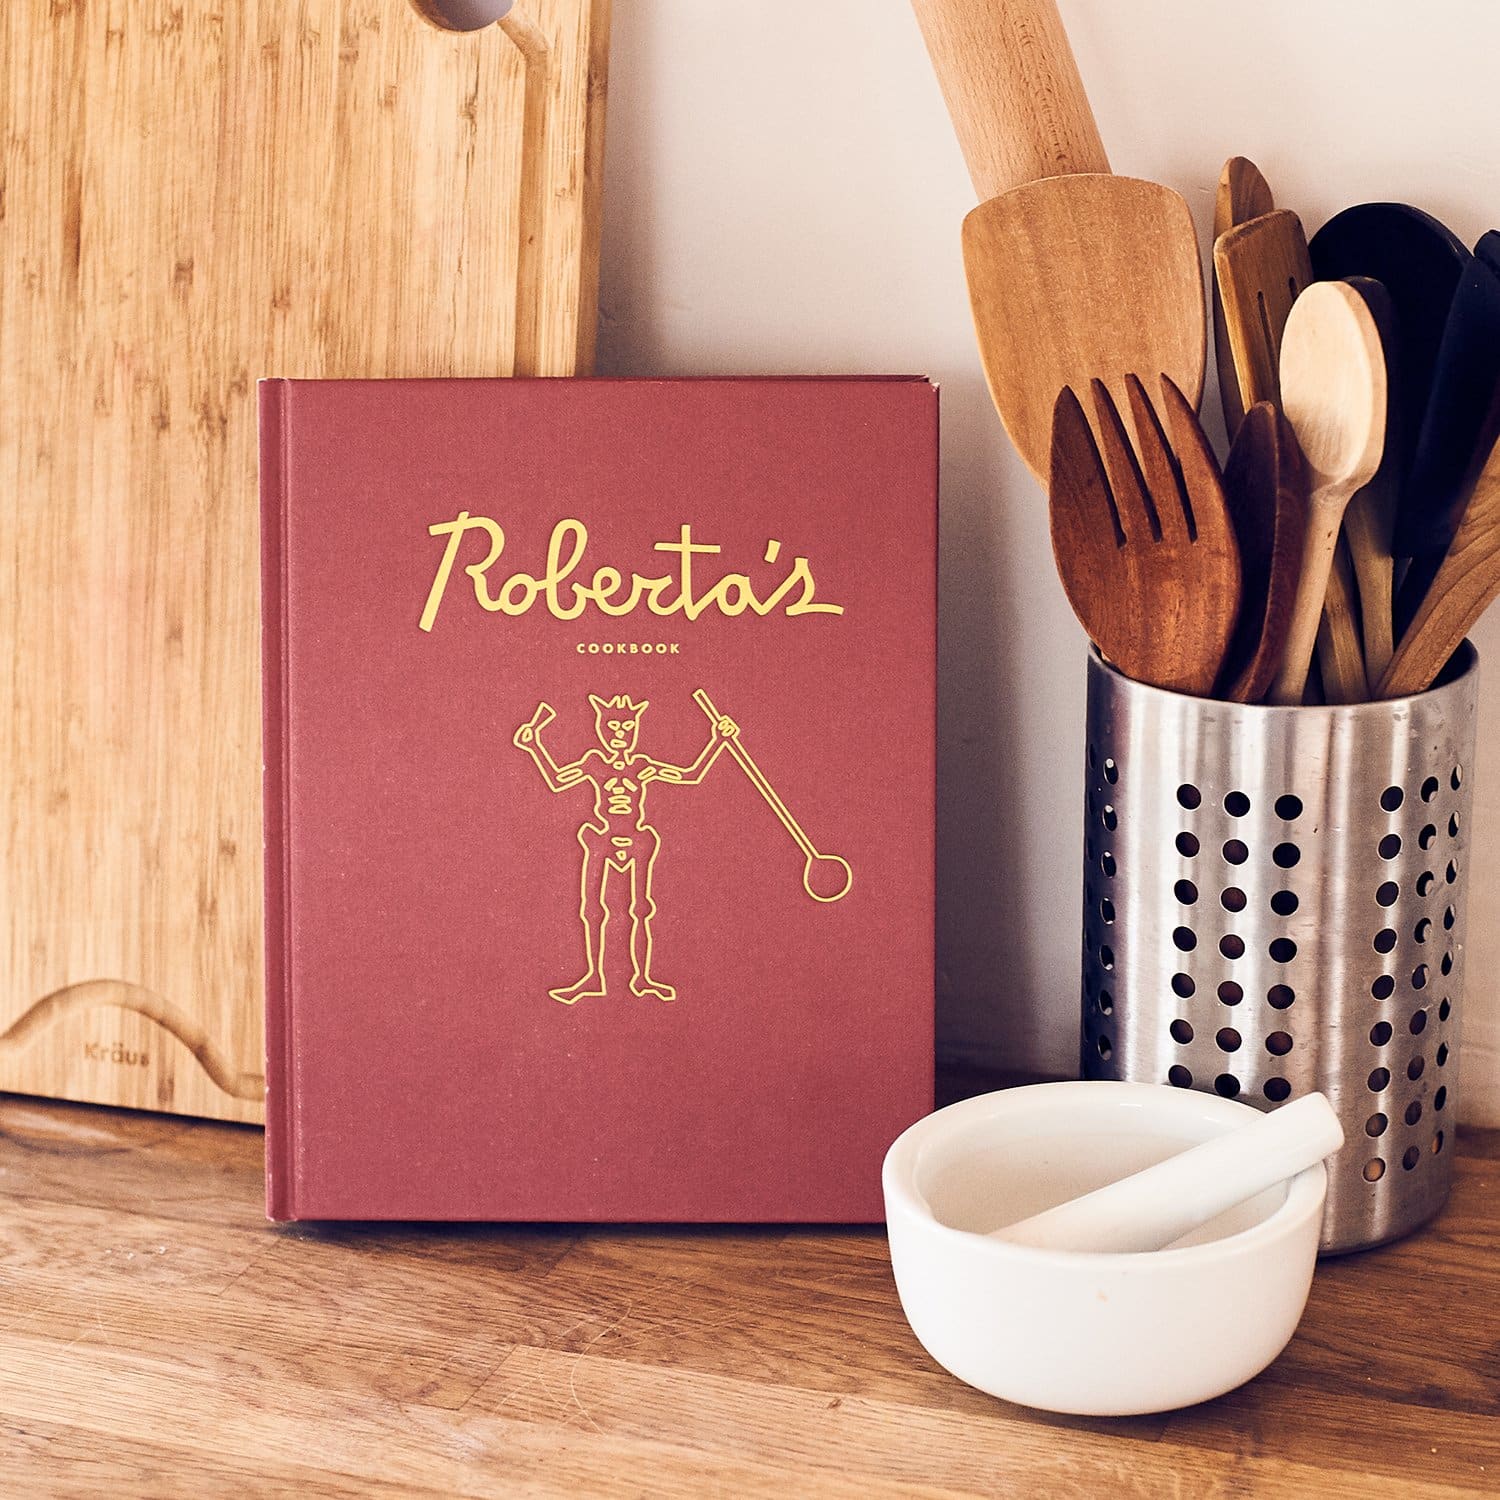 Roberta’s Cookbook Bushwick - Cookbook - Food - Pizza - 